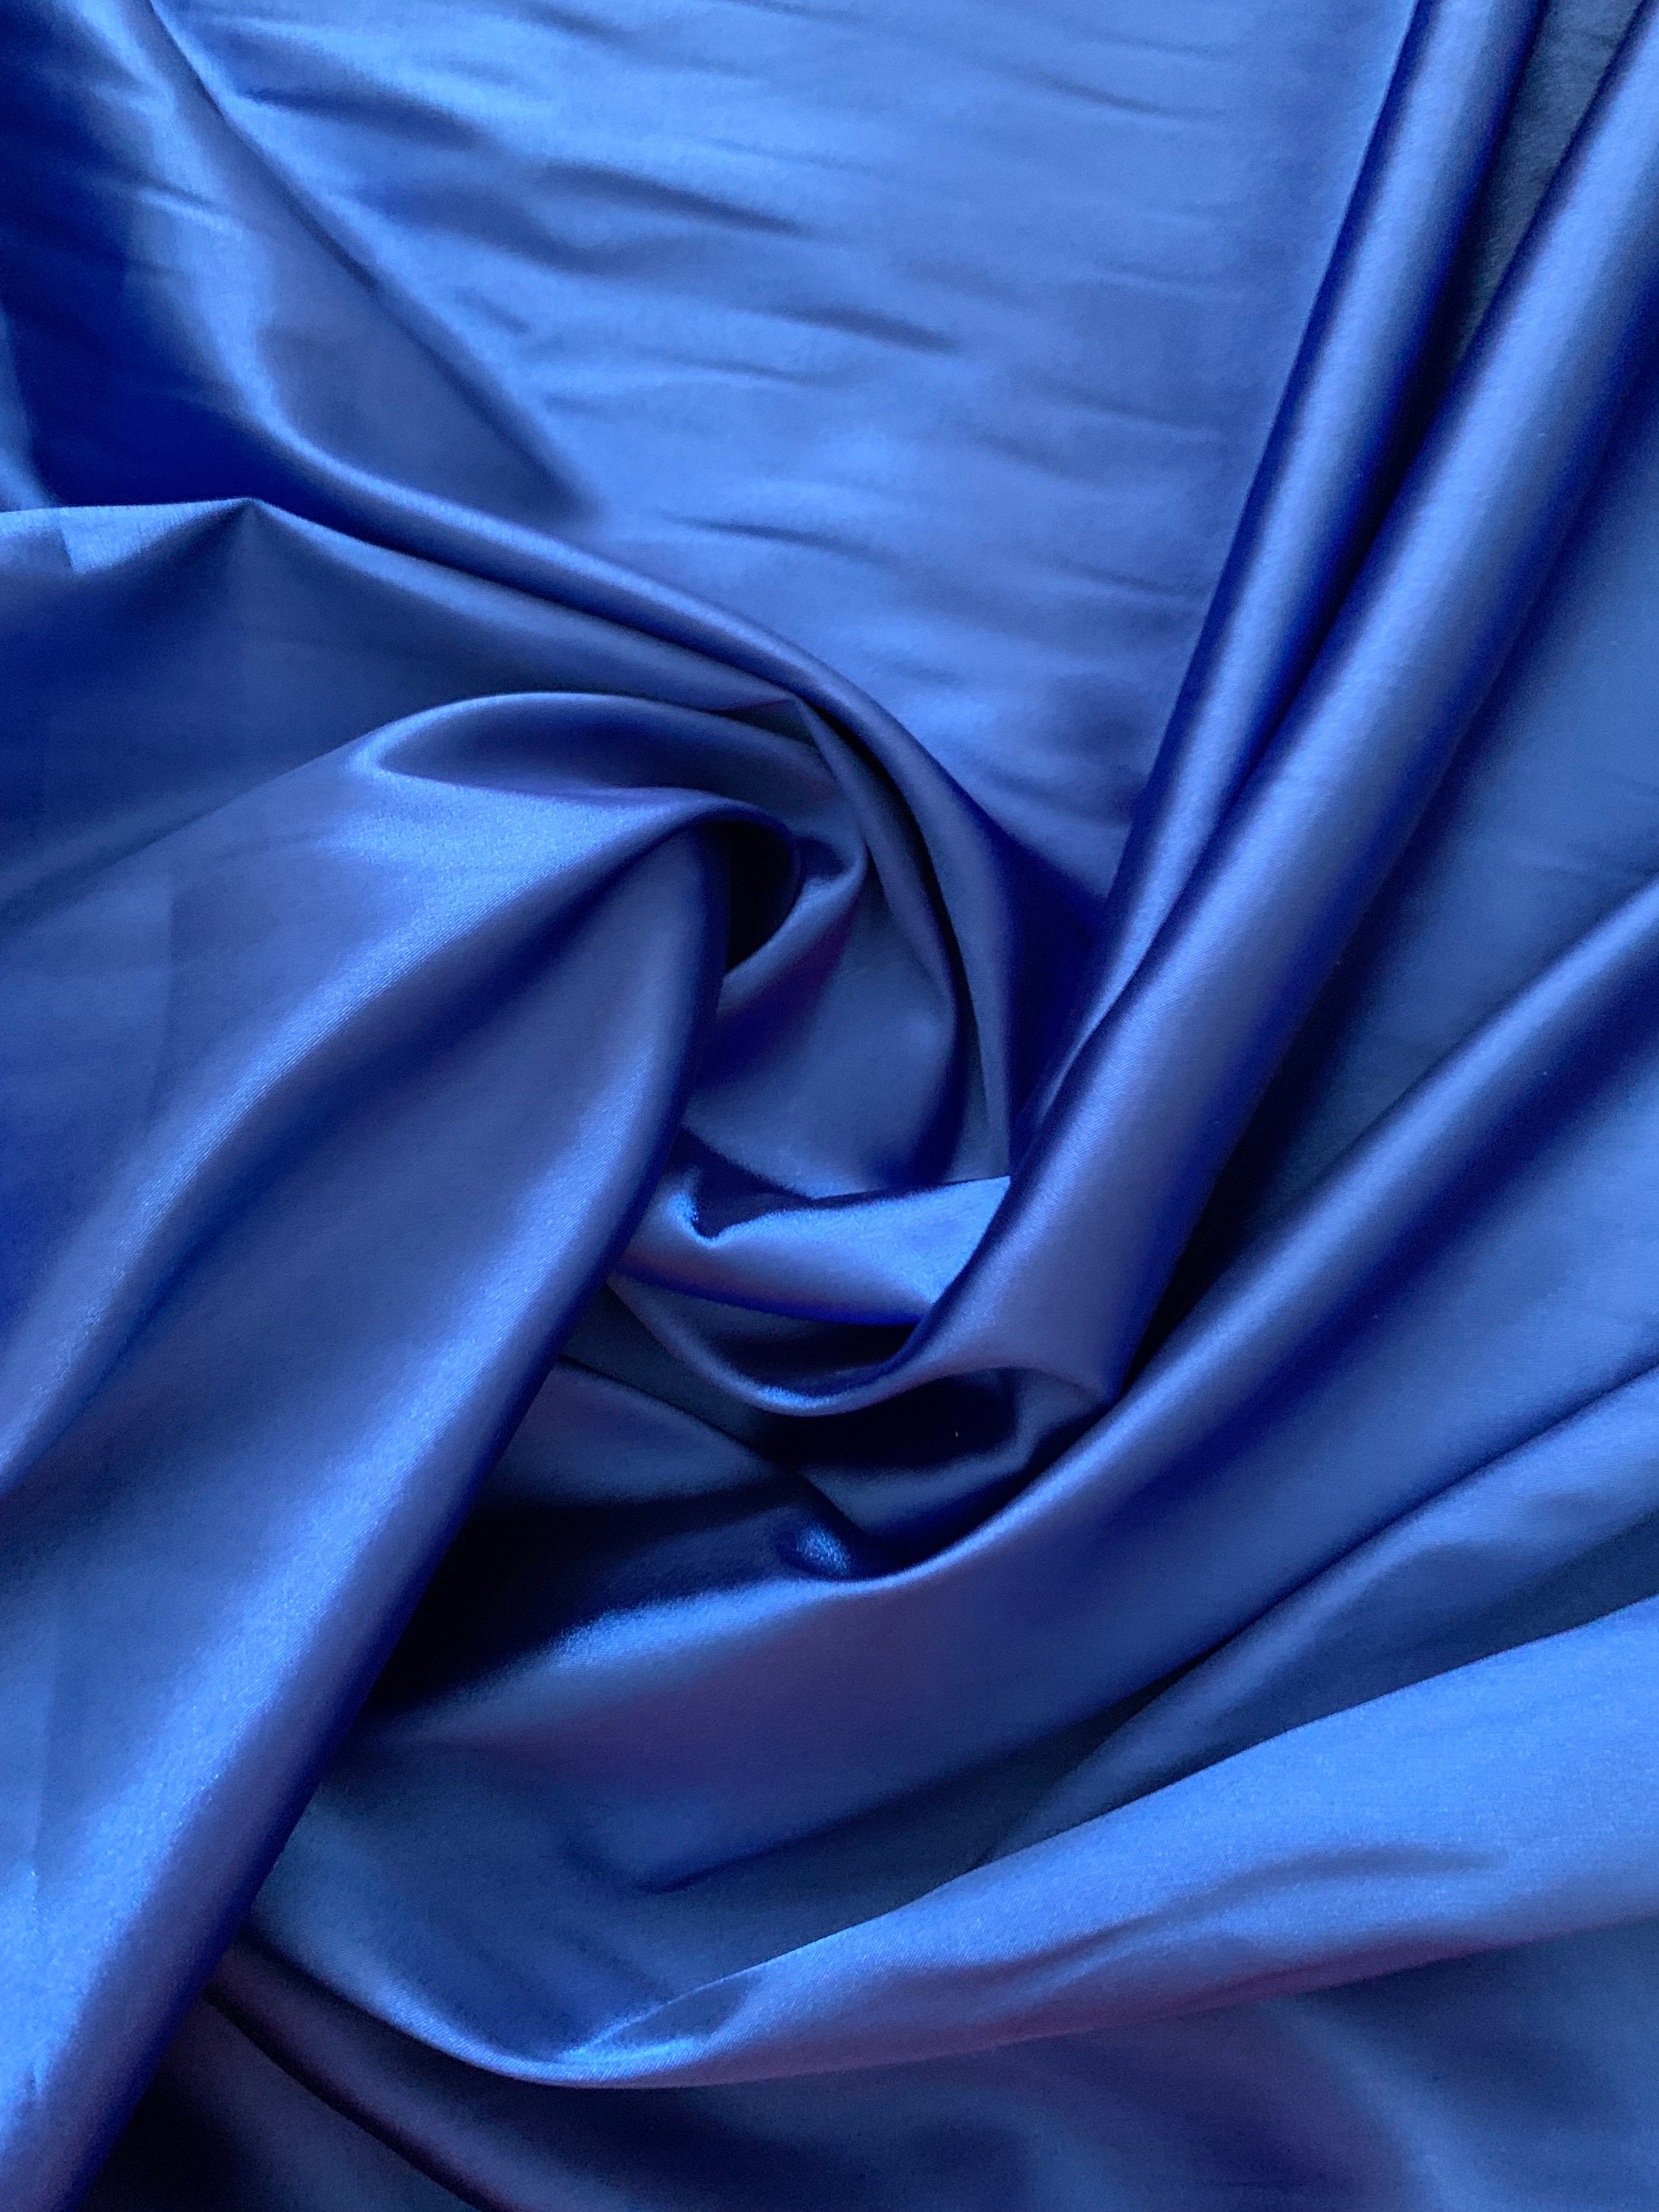 Royal blue Stretch Satin, polyester spandex satin fabric shiny stretch  satin fabric dress shirt lingerie